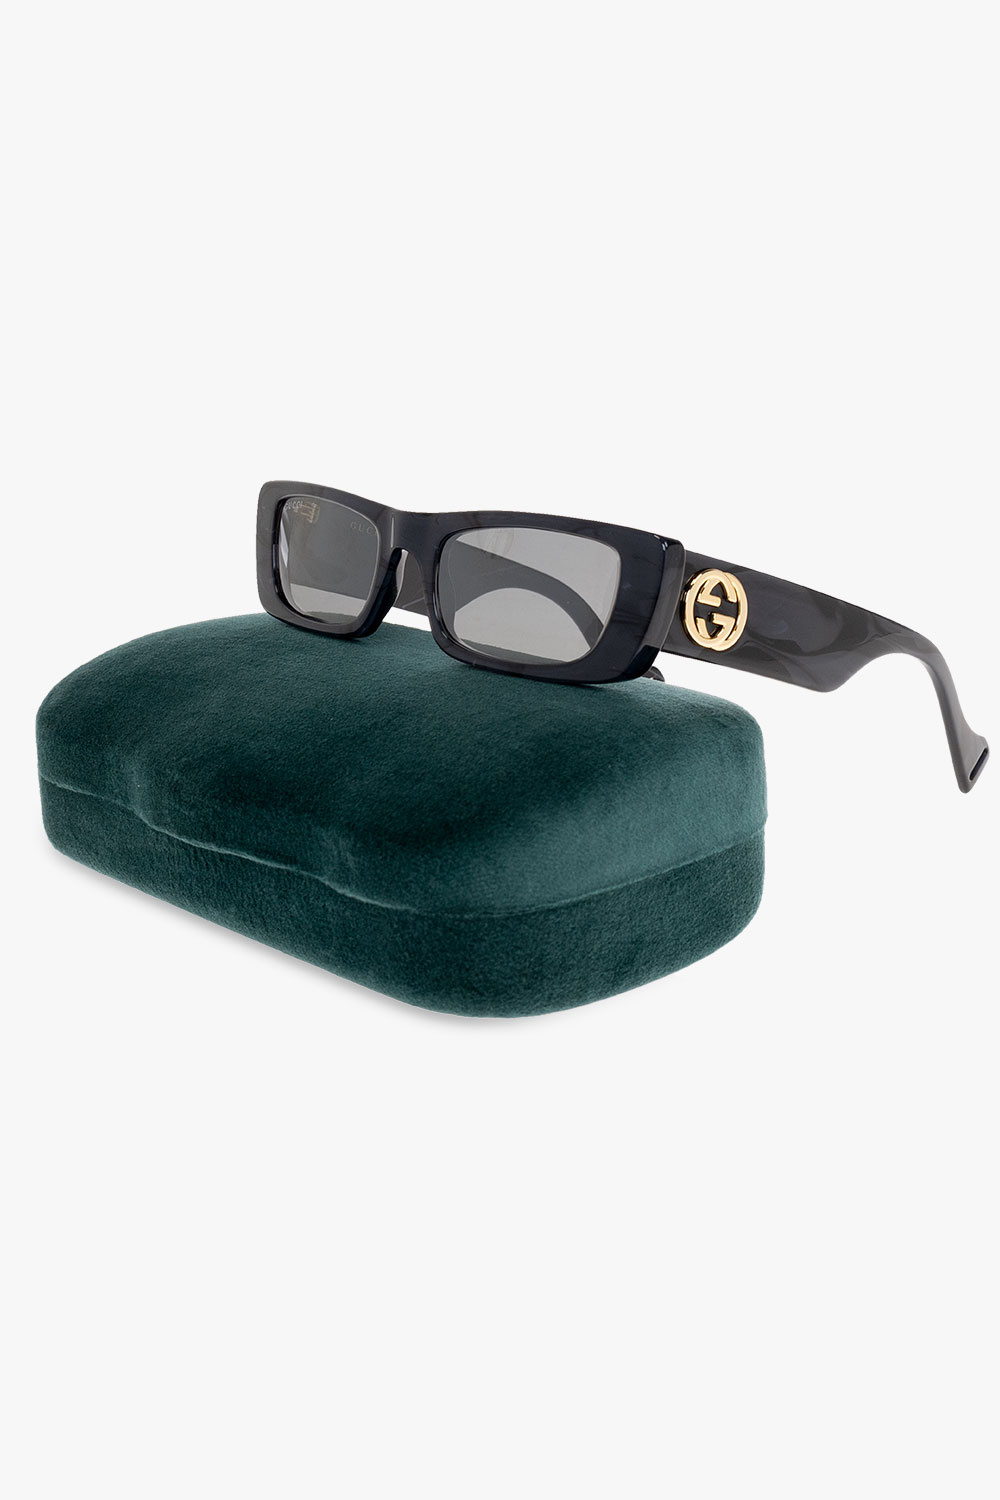 IetpShops Italy - Graffiti pilot-frame sunglasses - Black Sunglasses Gucci